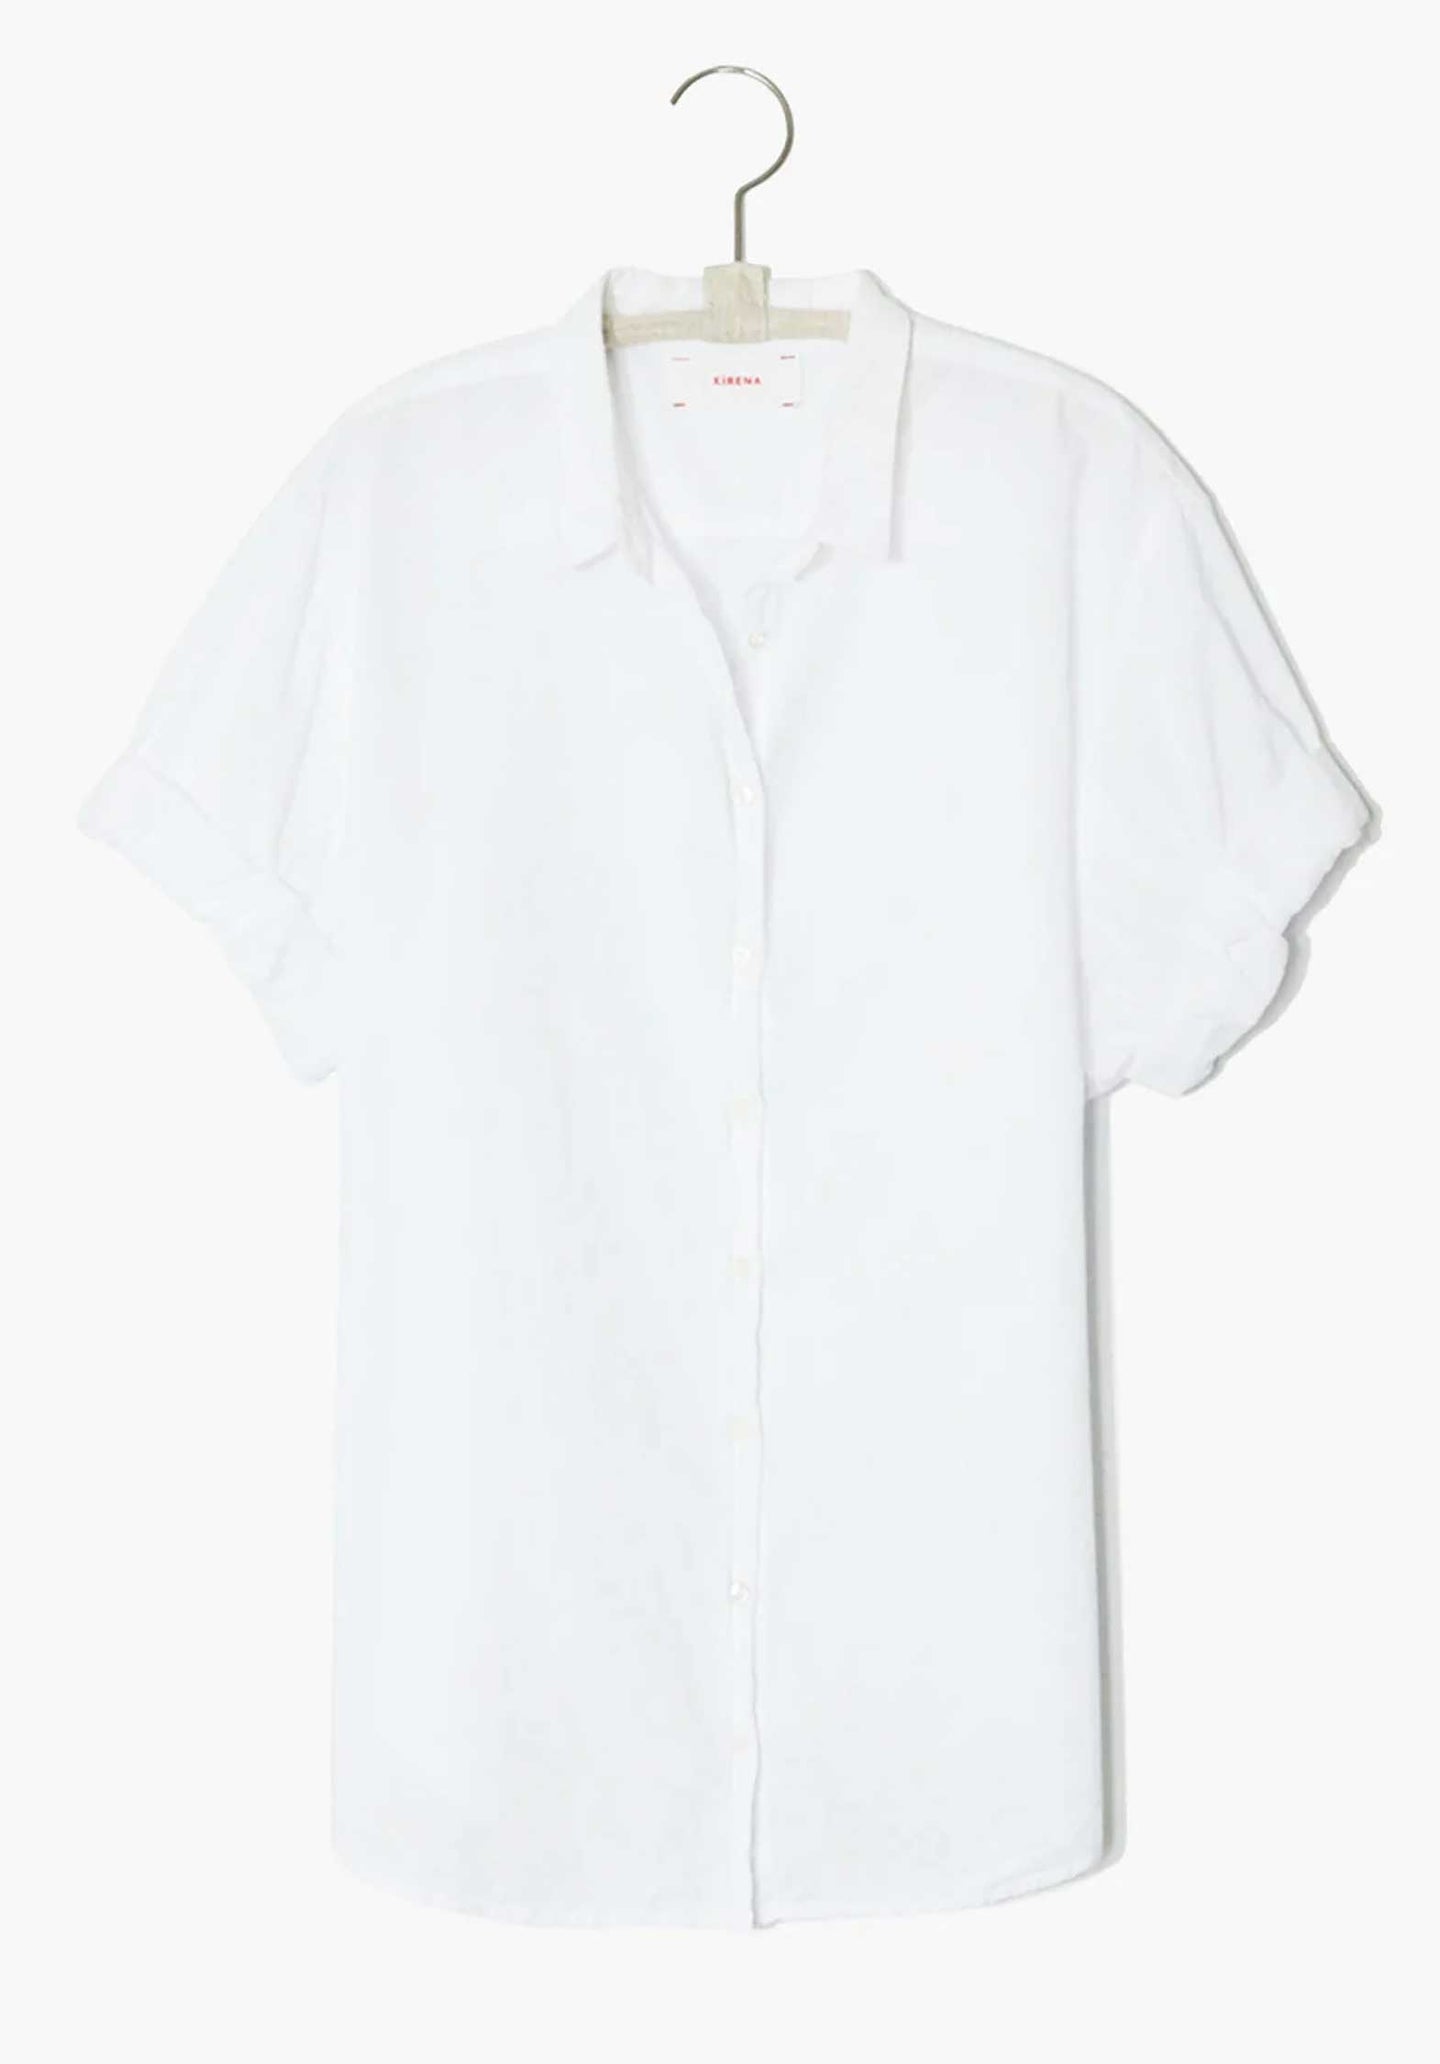 Shirt X08514 Channing Channing Shirt White